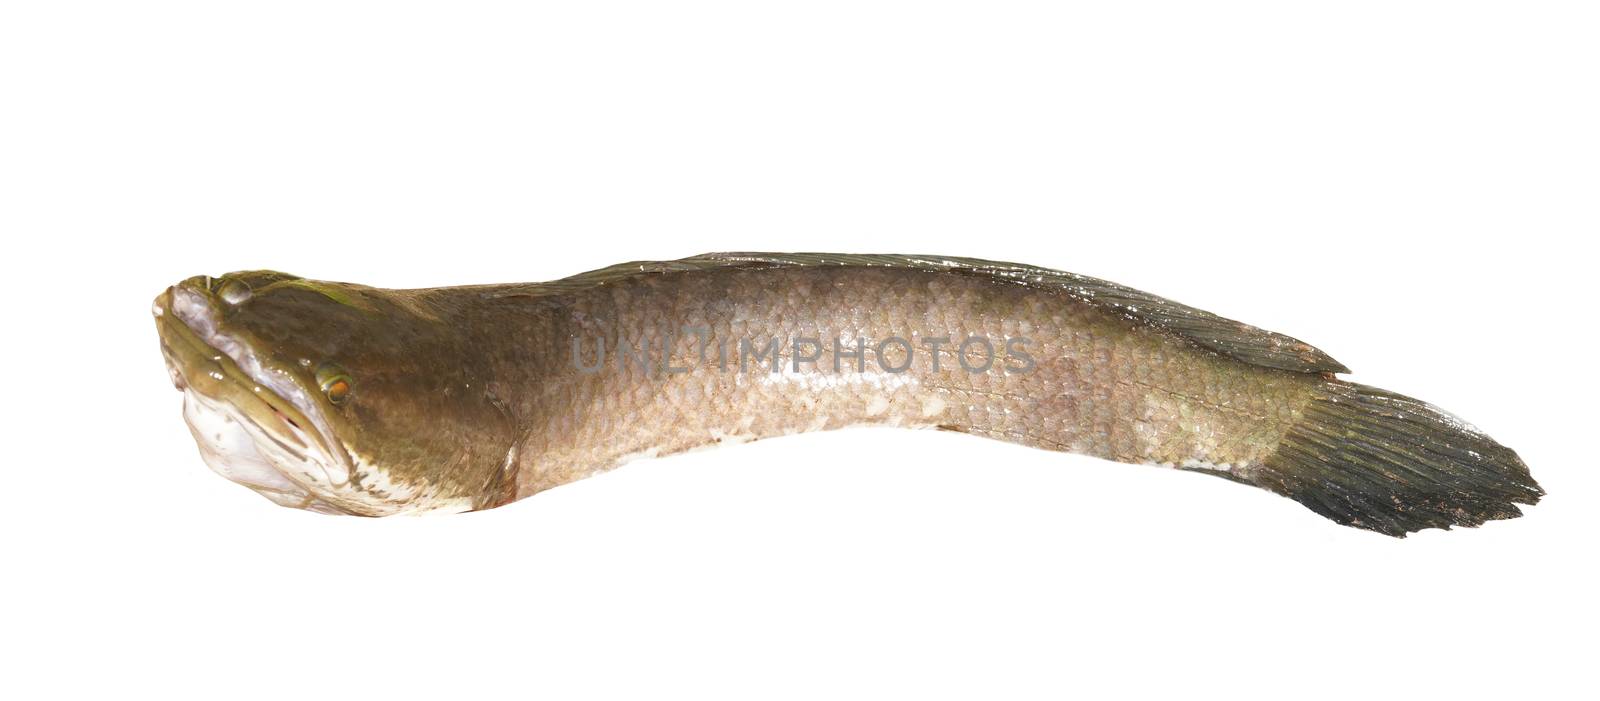 Thailand big snakehead fish isolated on white background.